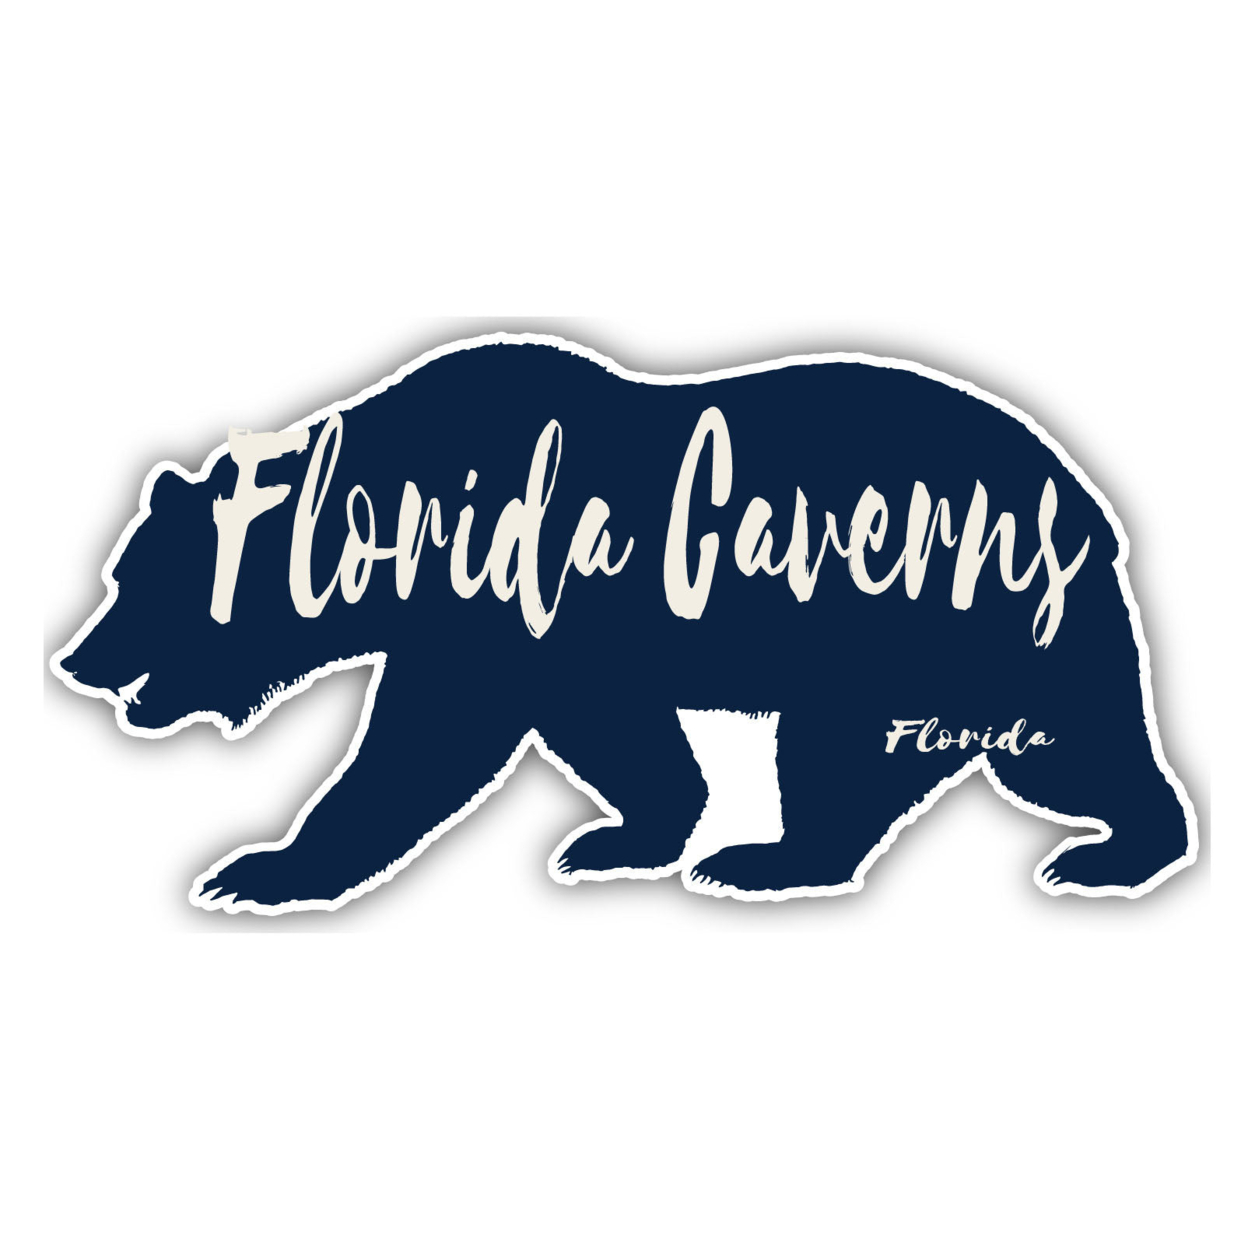 Florida Caverns Florida Souvenir Decorative Stickers (Choose Theme And Size) - 4-Pack, 12-Inch, Bear